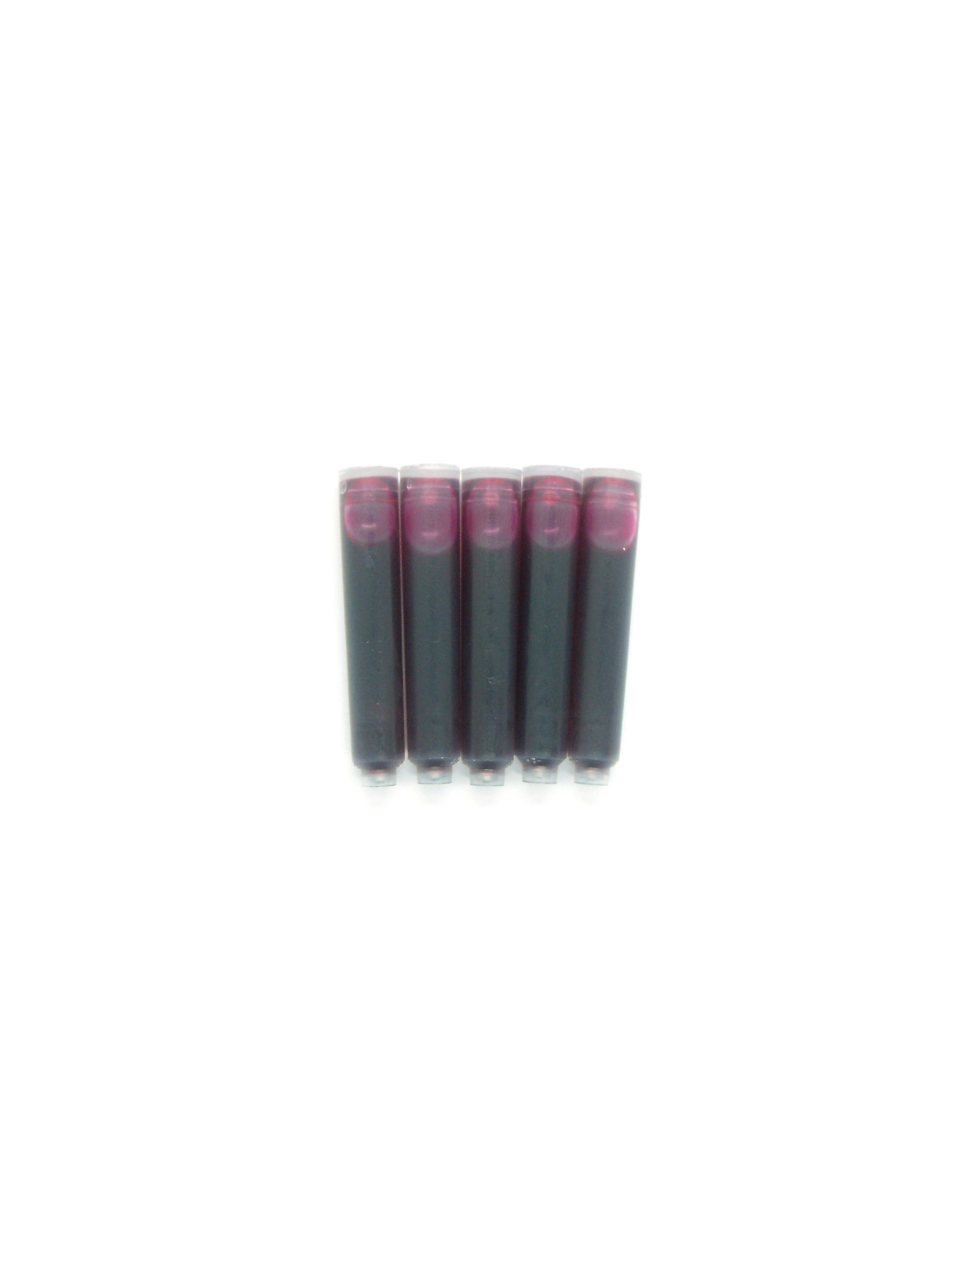 PenConverter Ink Cartridges For Laban Fountain Pens (Pink)